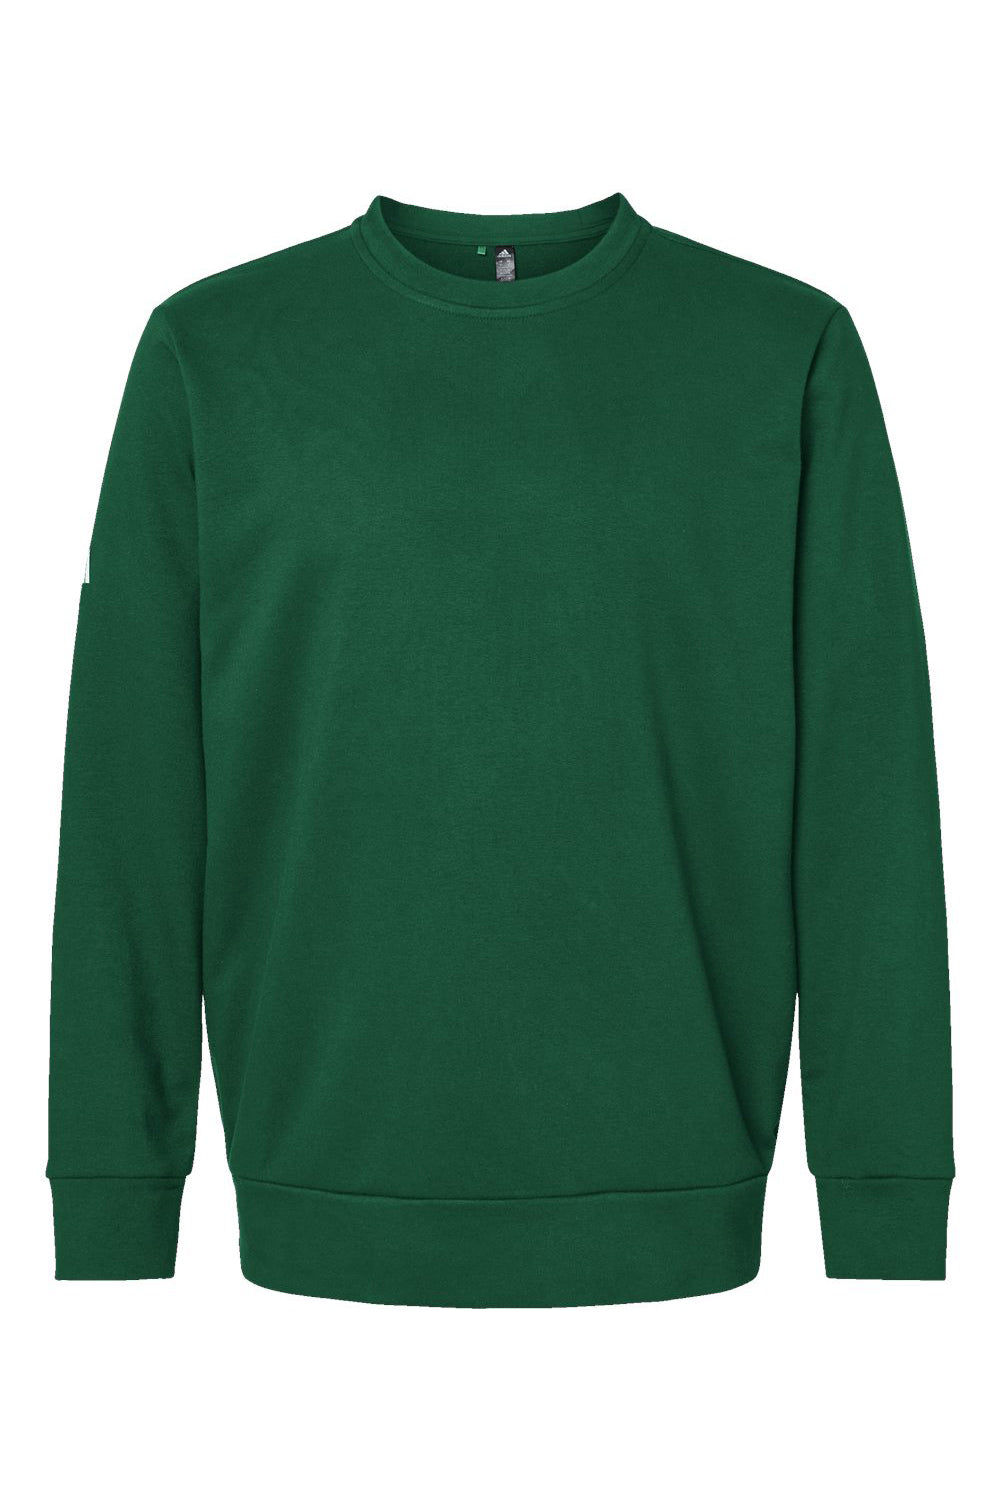 Adidas A434 Mens Fleece Crewneck Sweatshirt Collegiate Green Flat Front